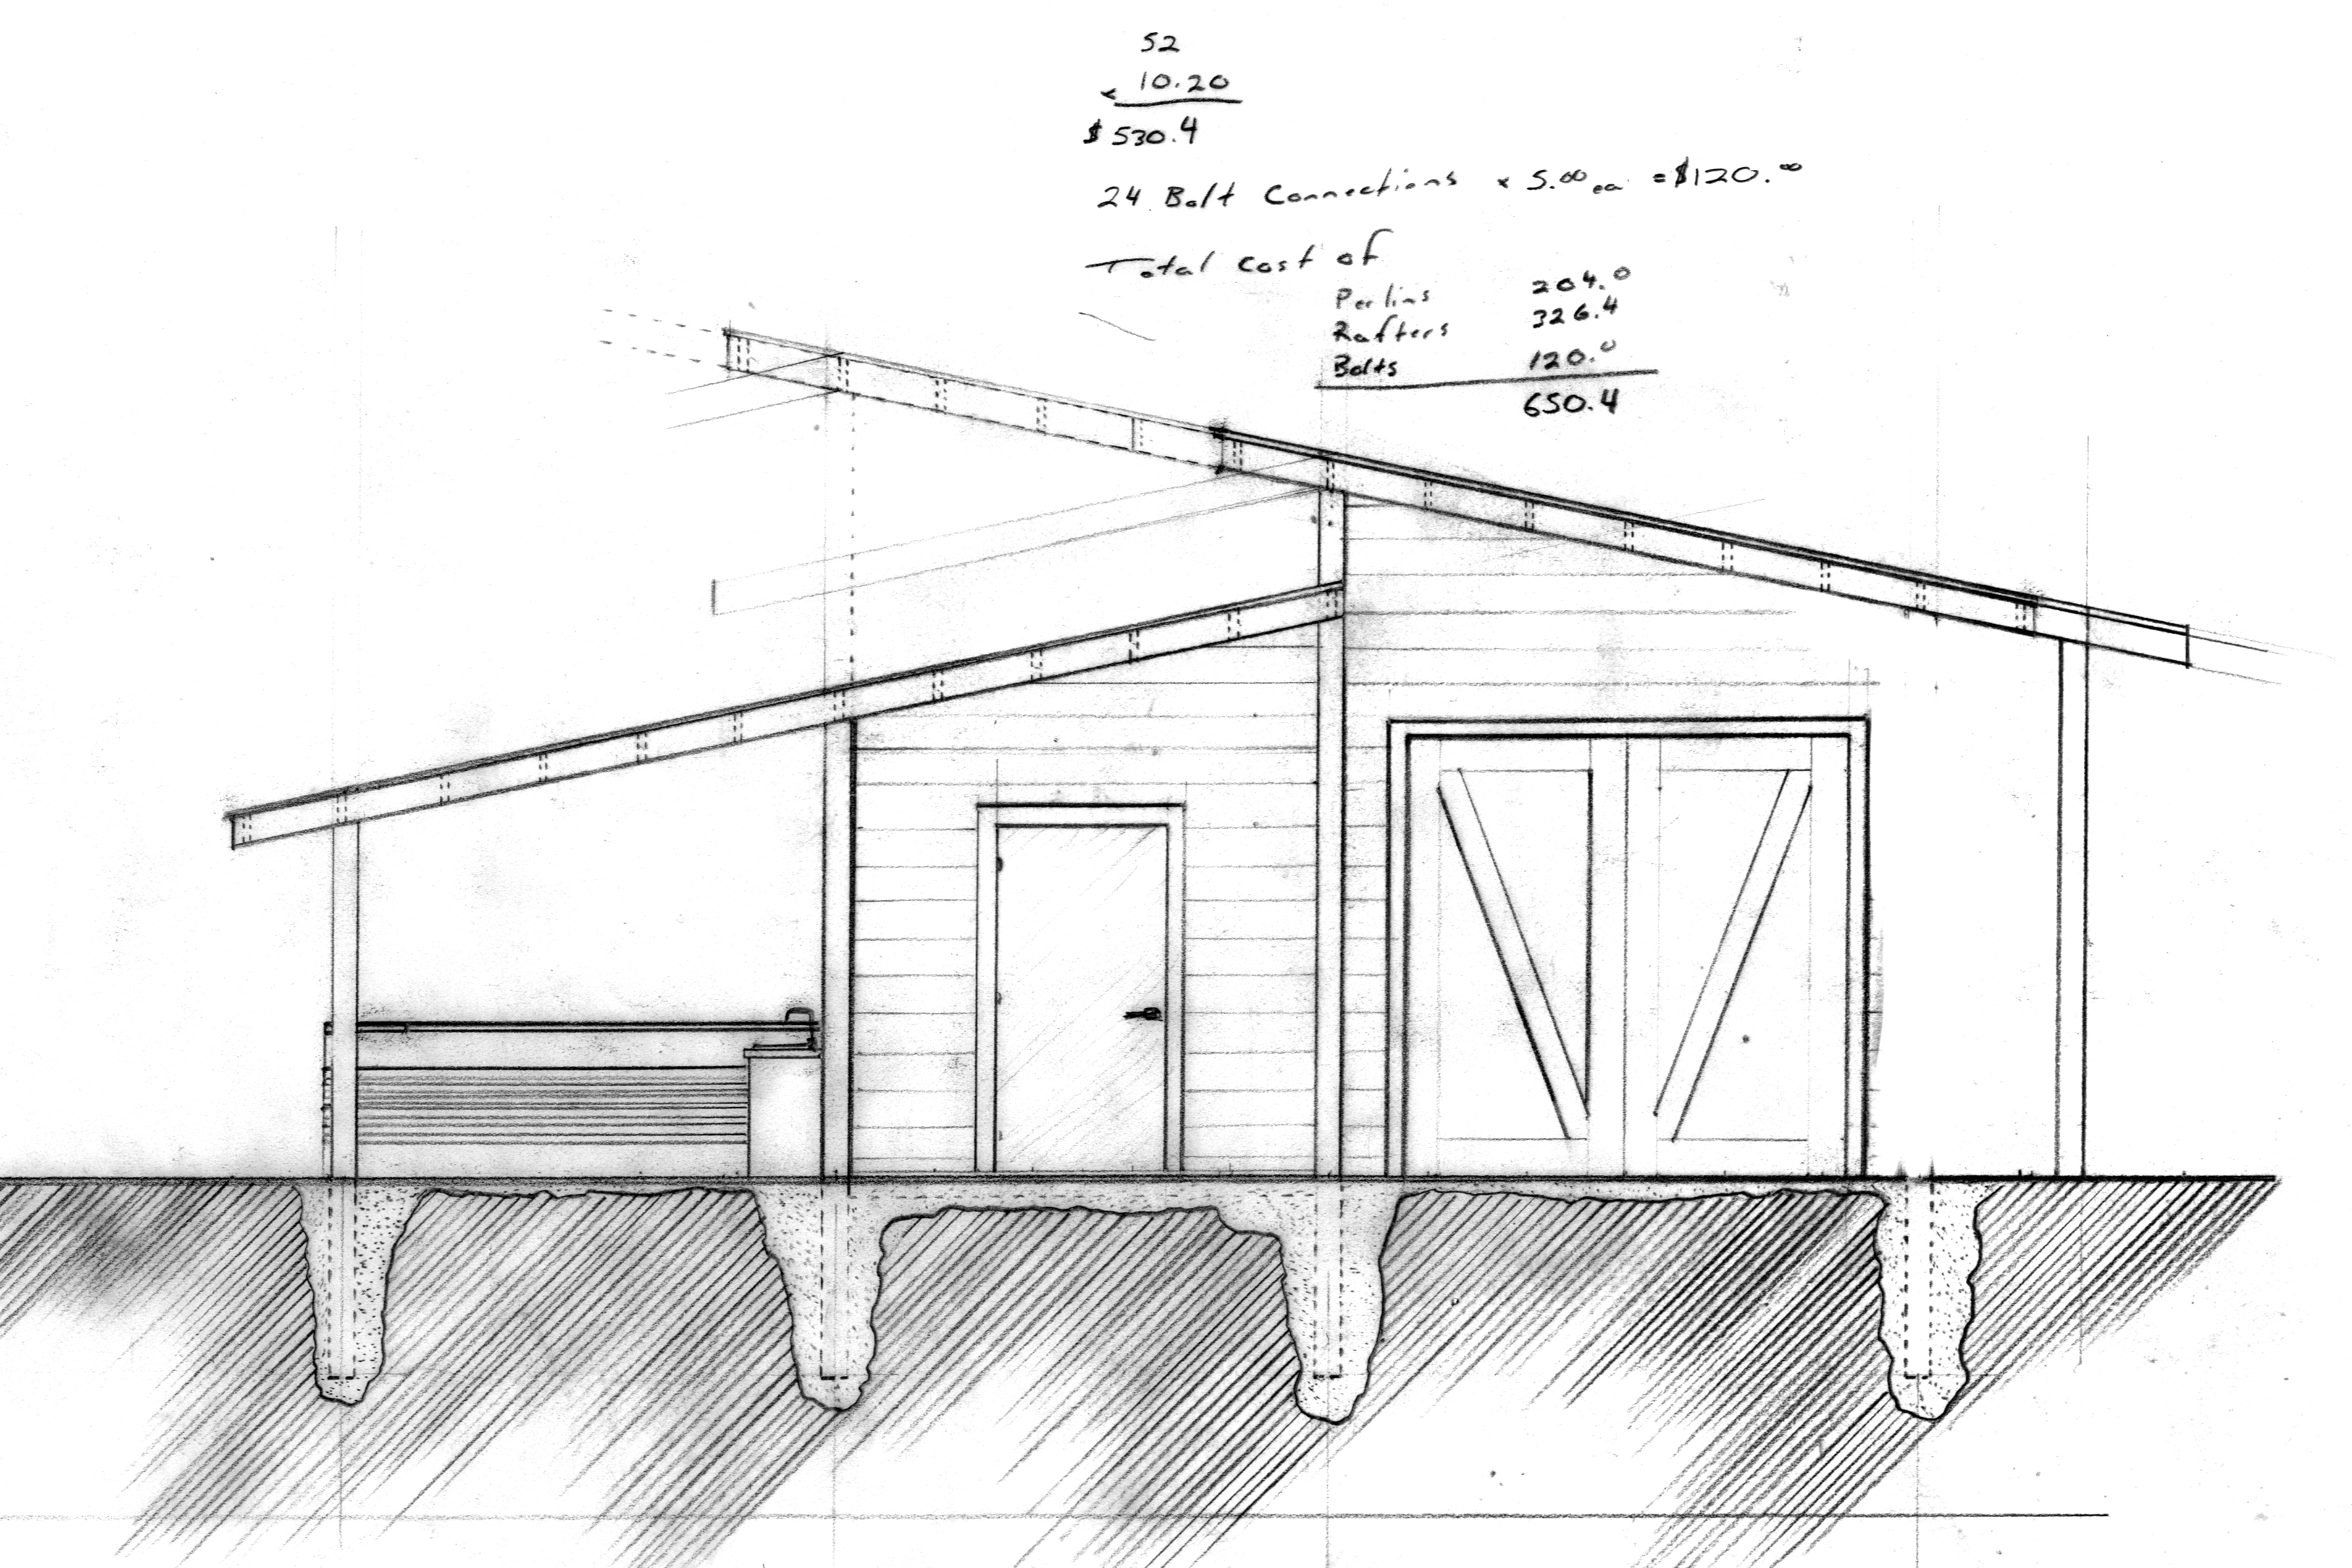 interlocking shed roofs longitudinal